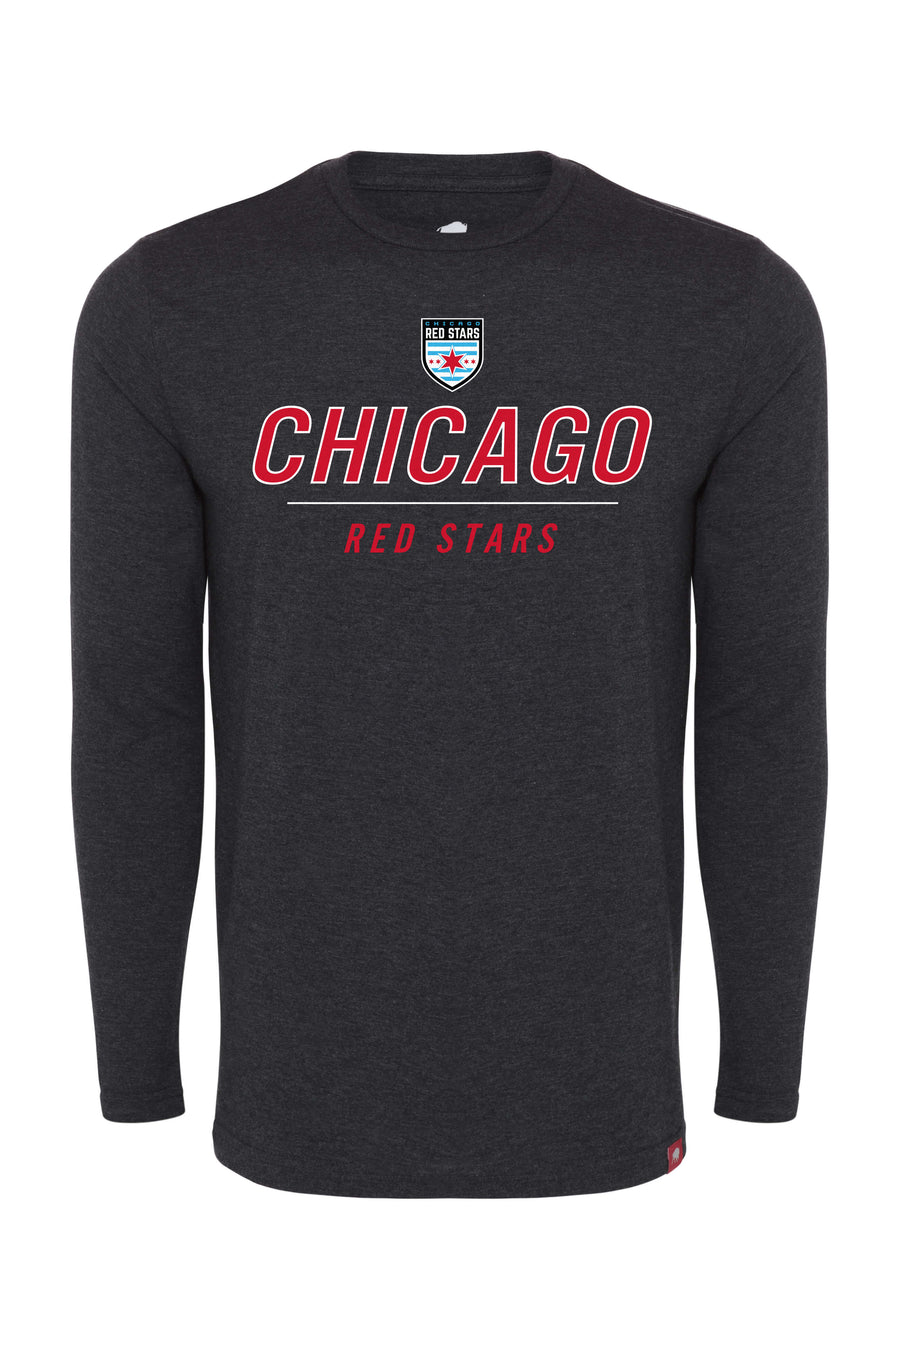 Chicago Red Stars Sportiqe Men's Black LS Comfy Tee